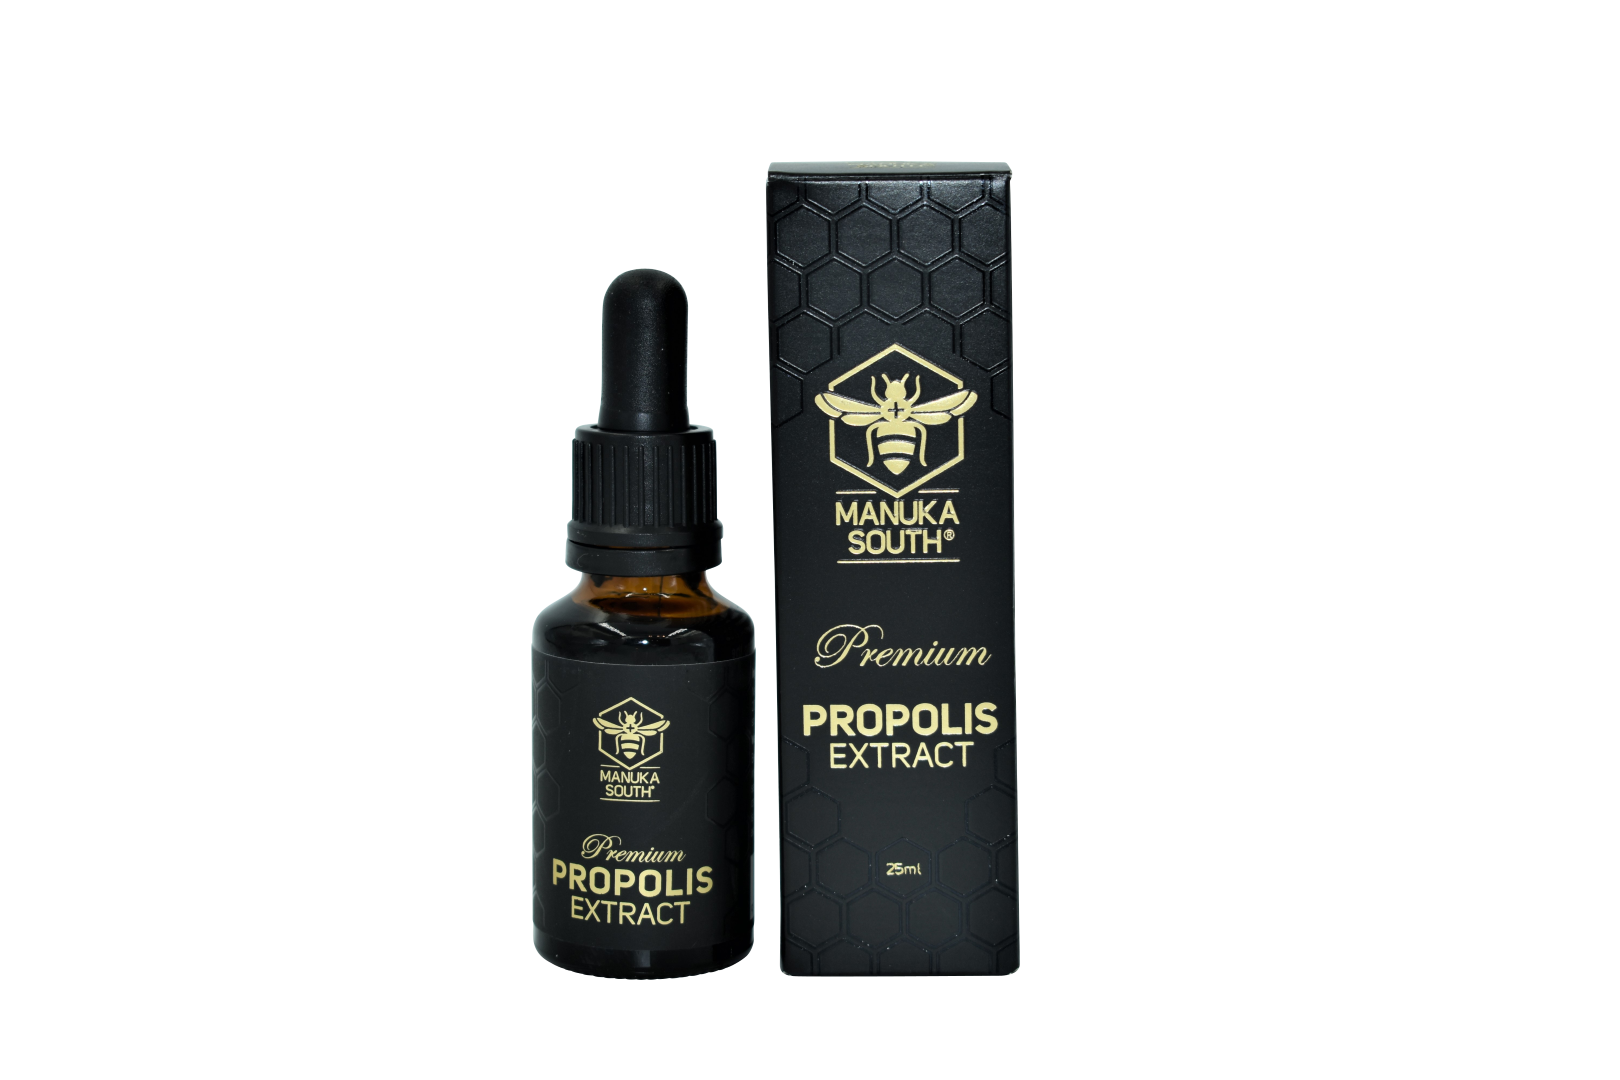 Manuka South Premium Propolis Extract 25ml